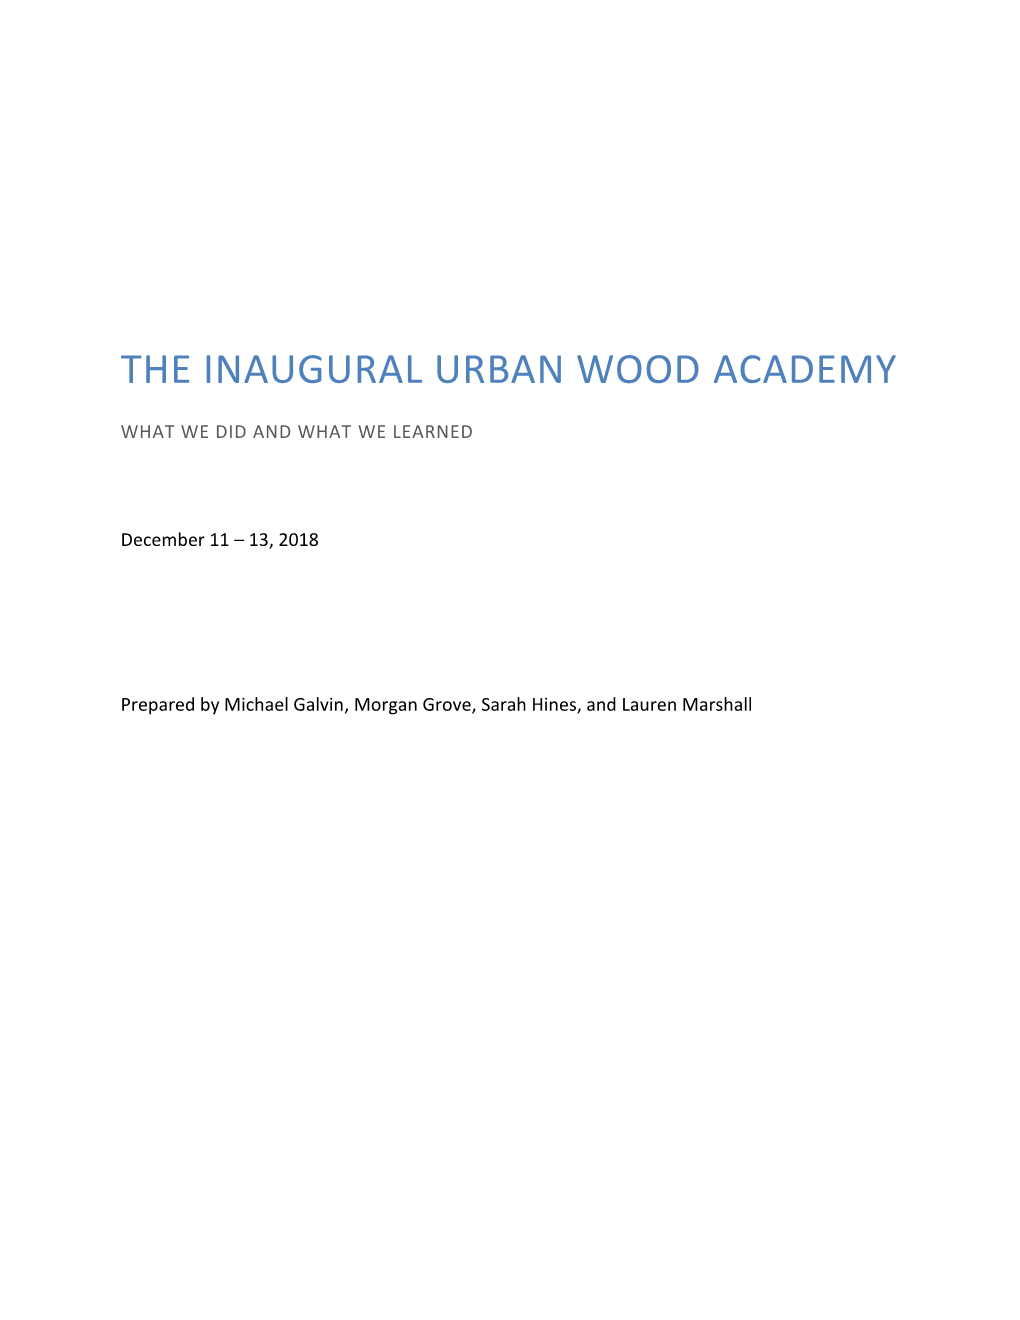 The Inaugural Urban Wood Academy